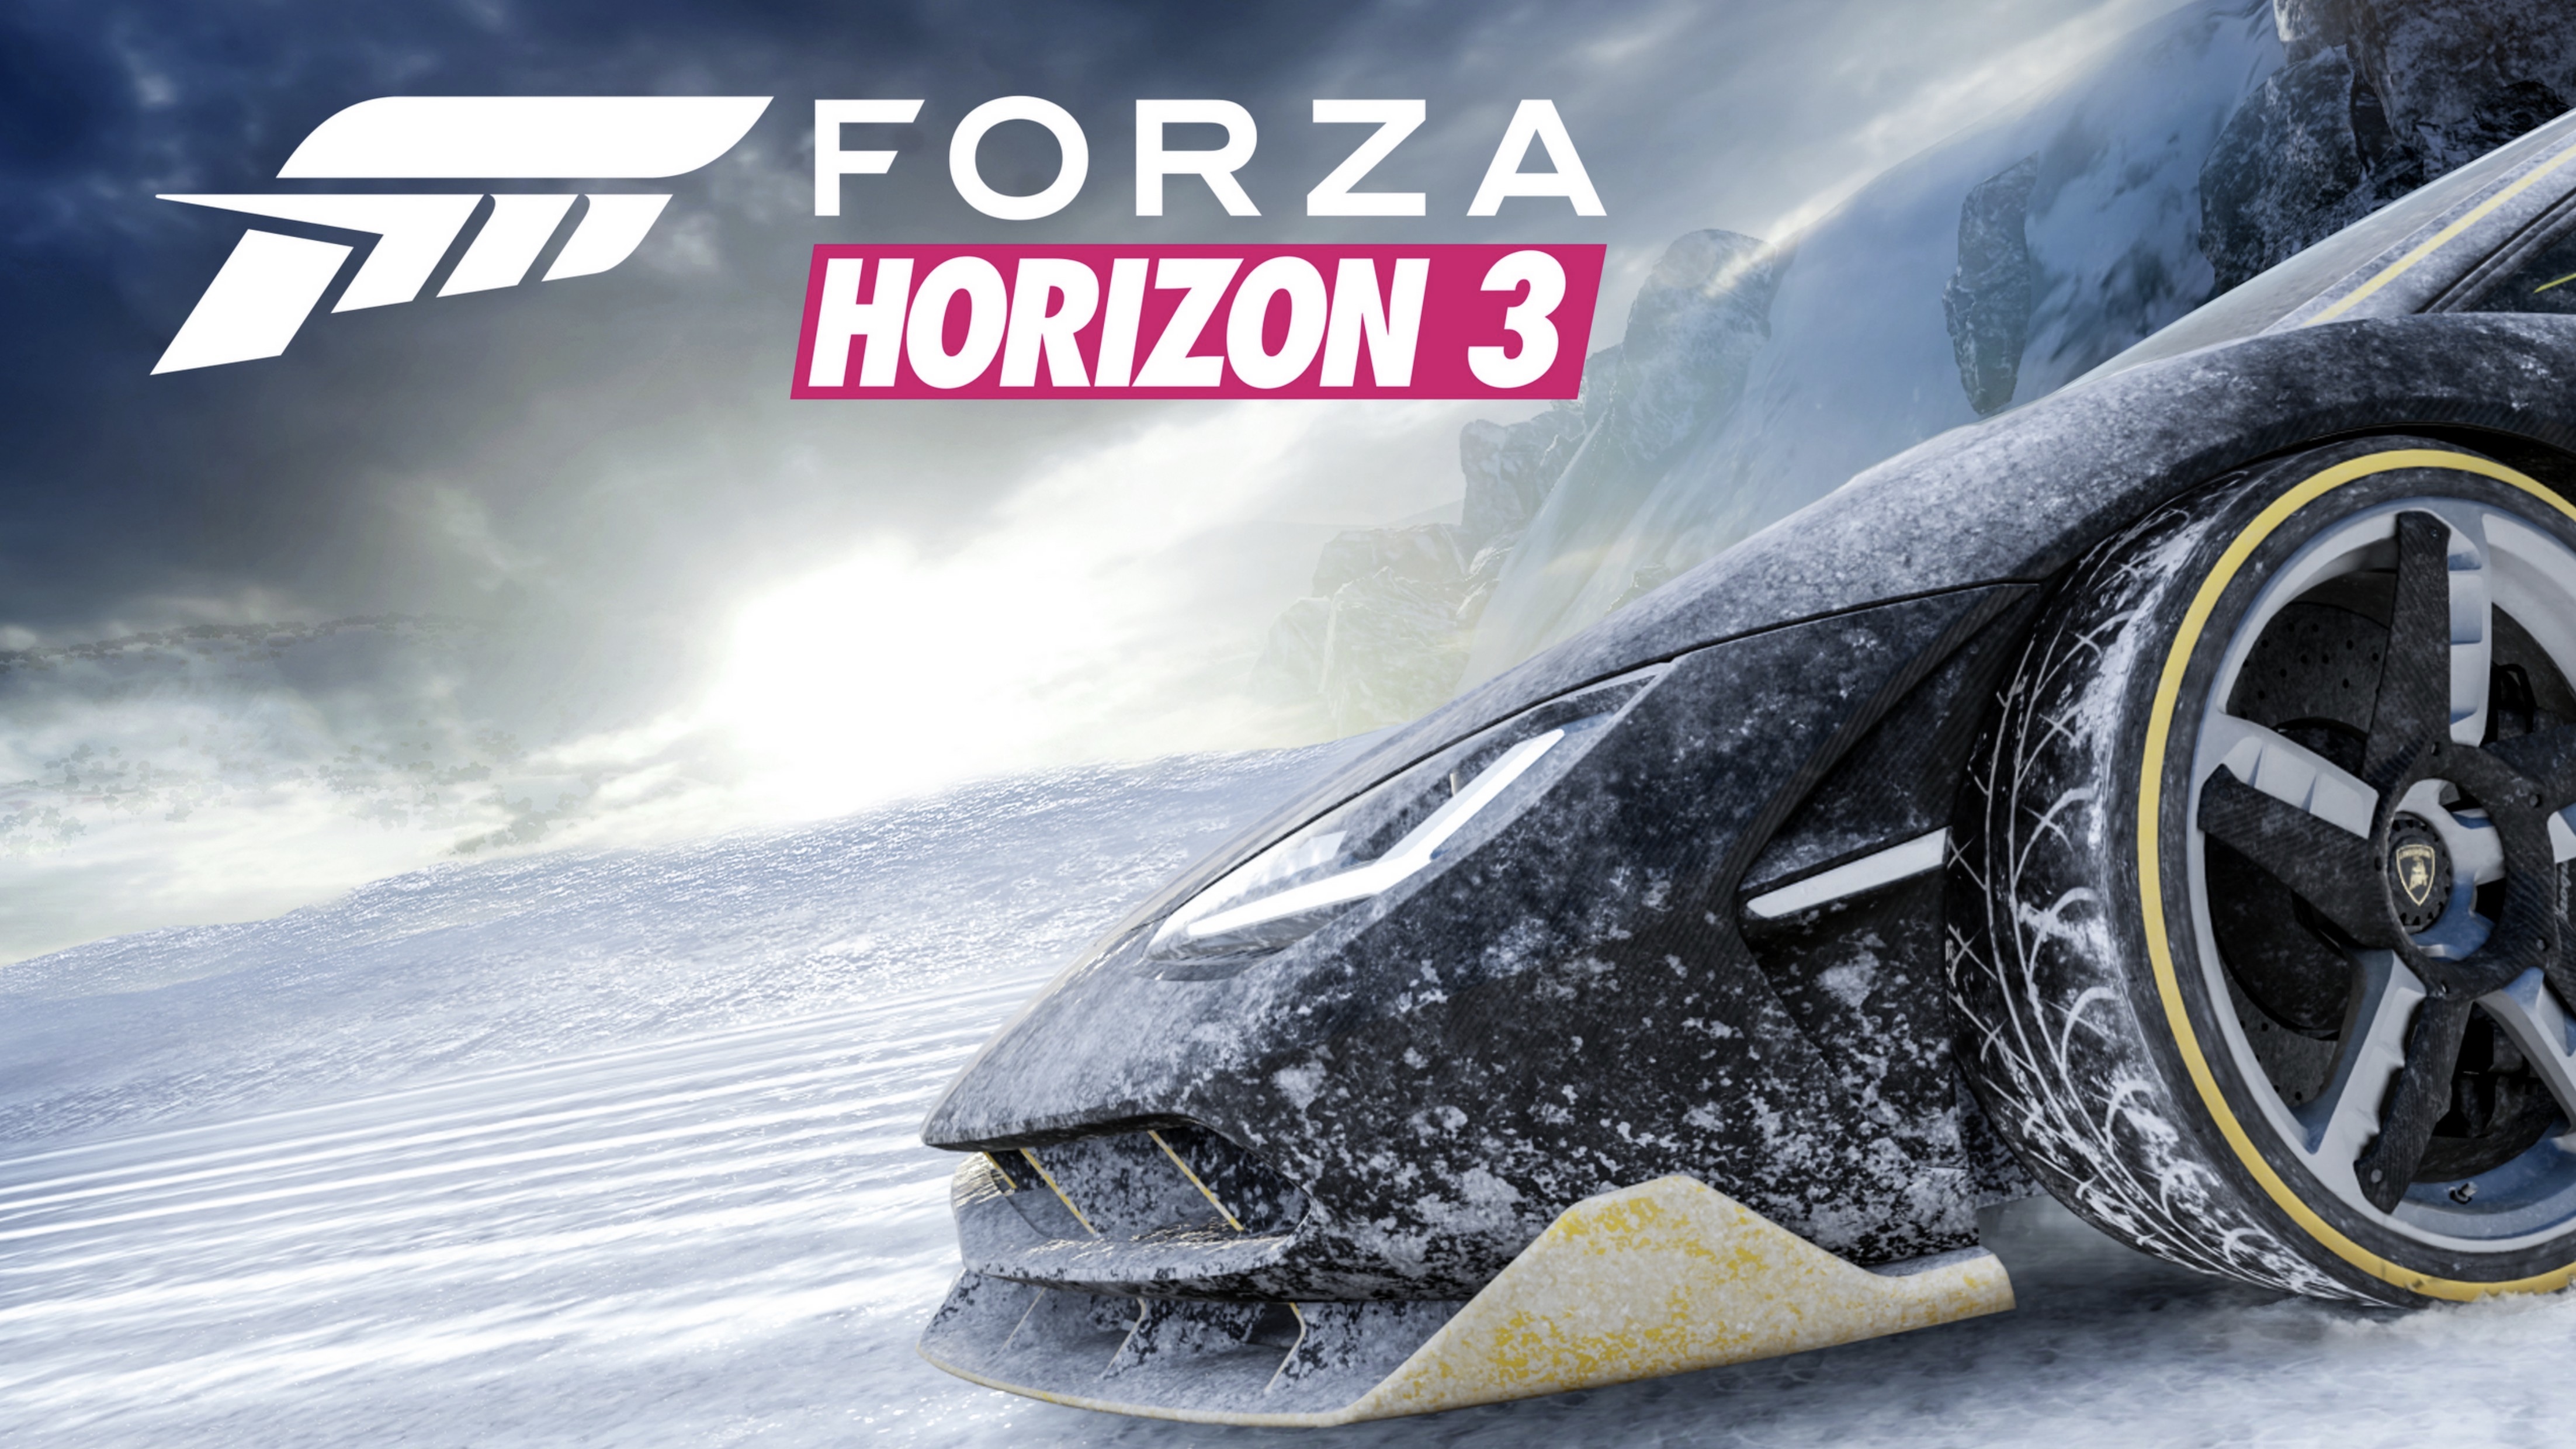 Buy Forza Horizon 3 Standard Edition